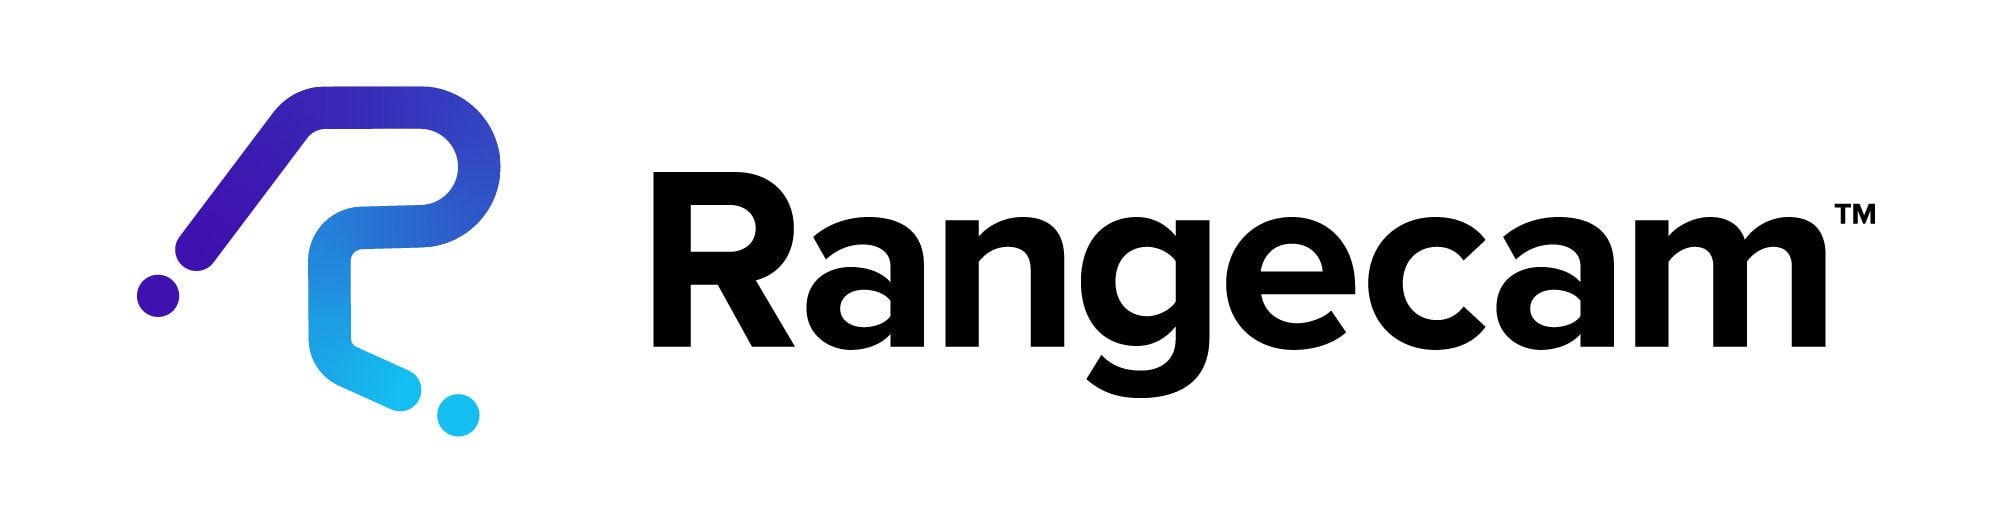 rc-logo-color-horizontal-onwhite